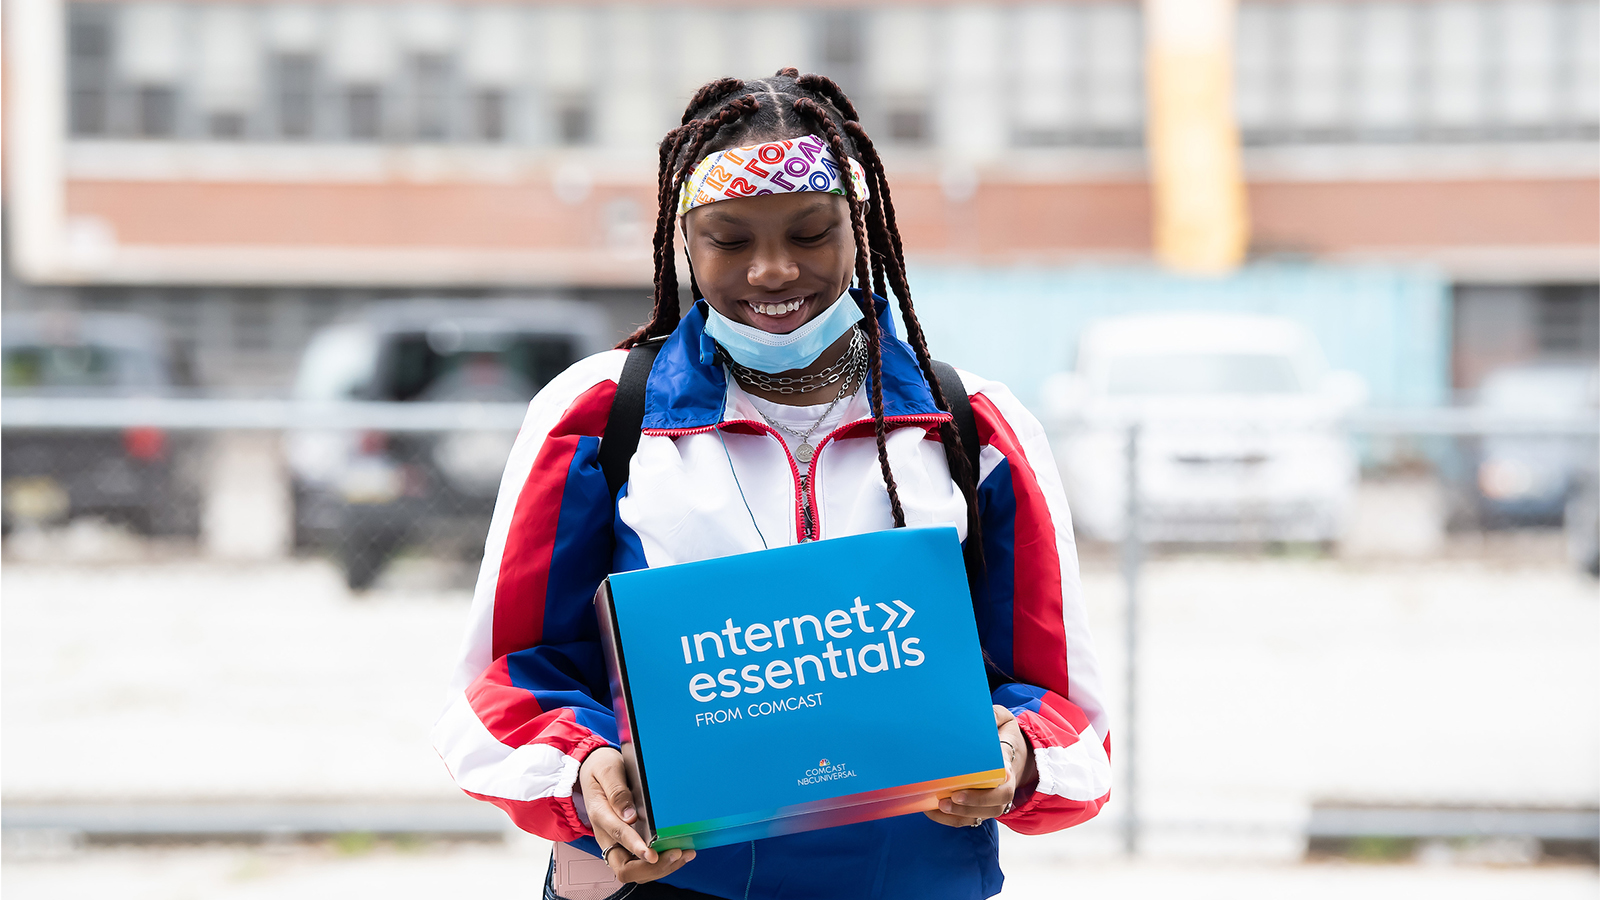 Comcast Internet Essentials - Strawberry Mansion High School Giveaway